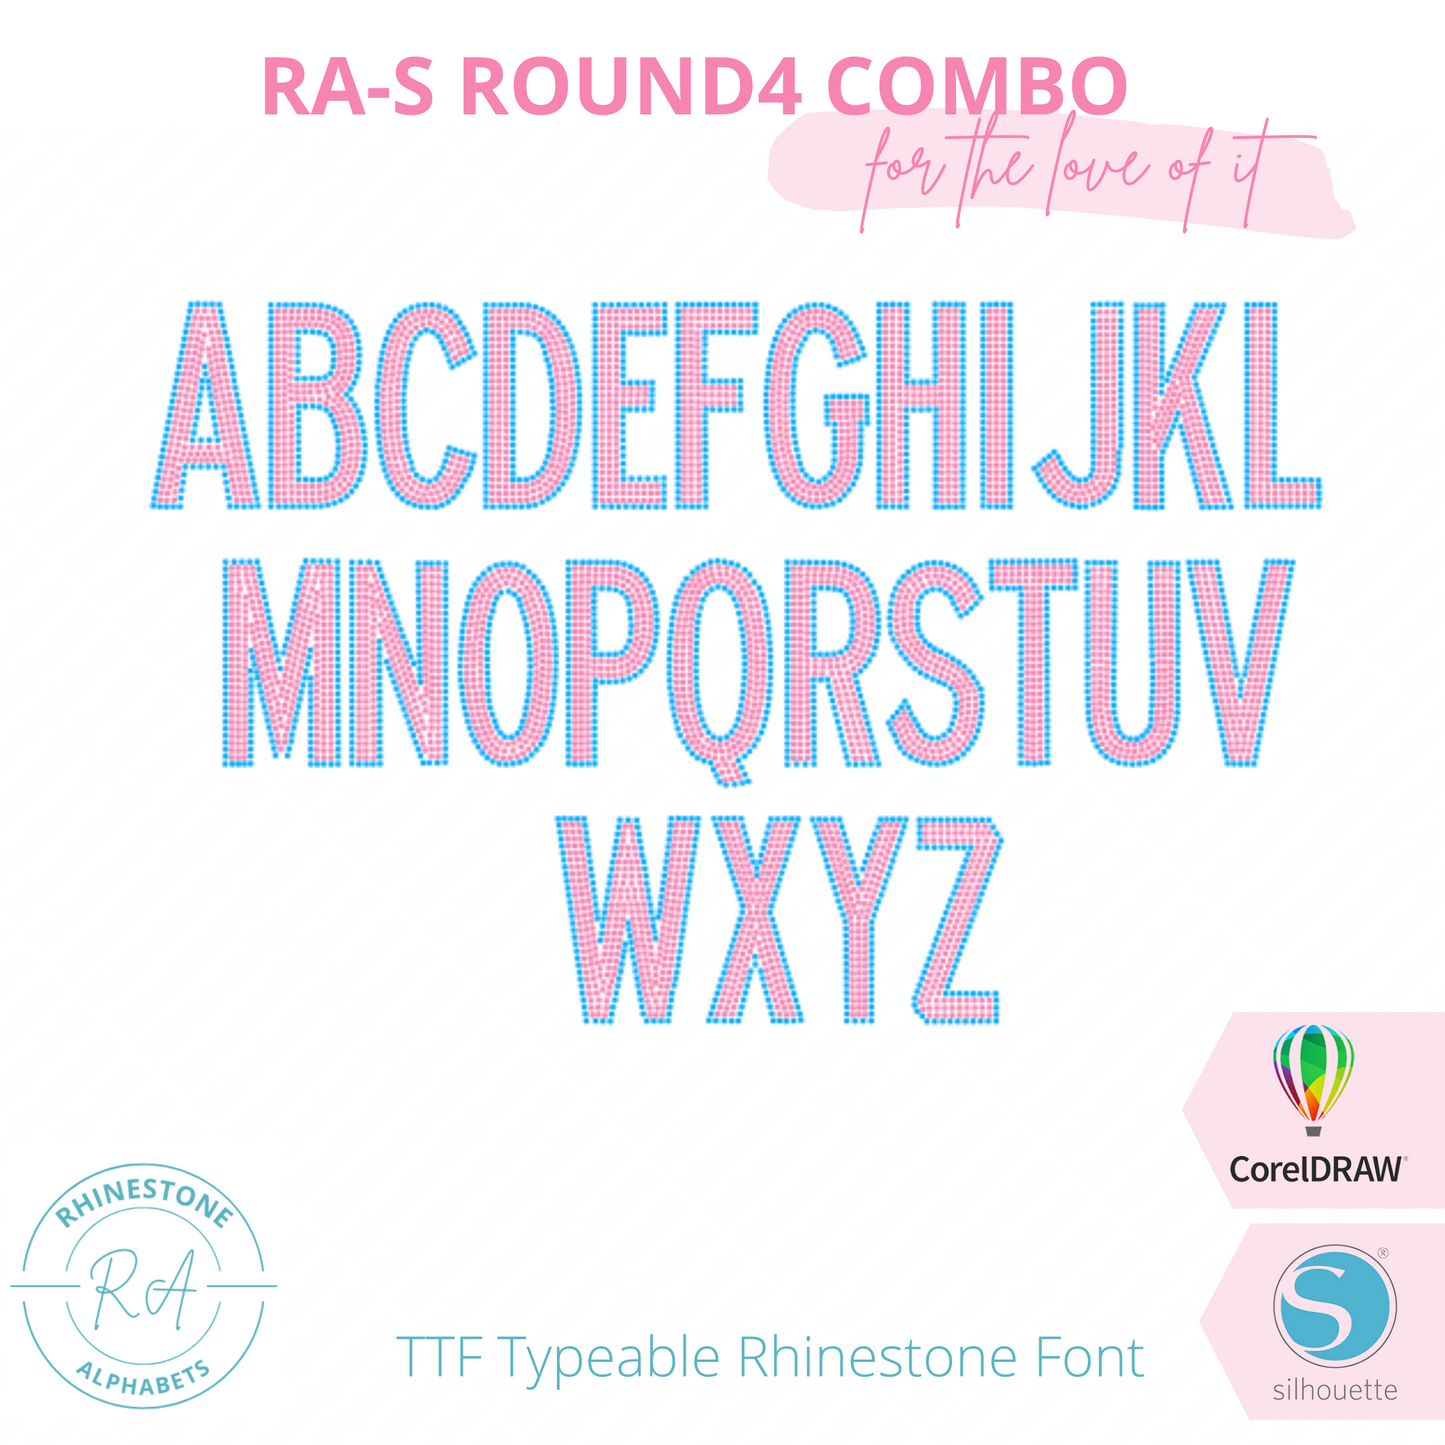 RA-S Round 4 Combo - RhinestoneAlphabets